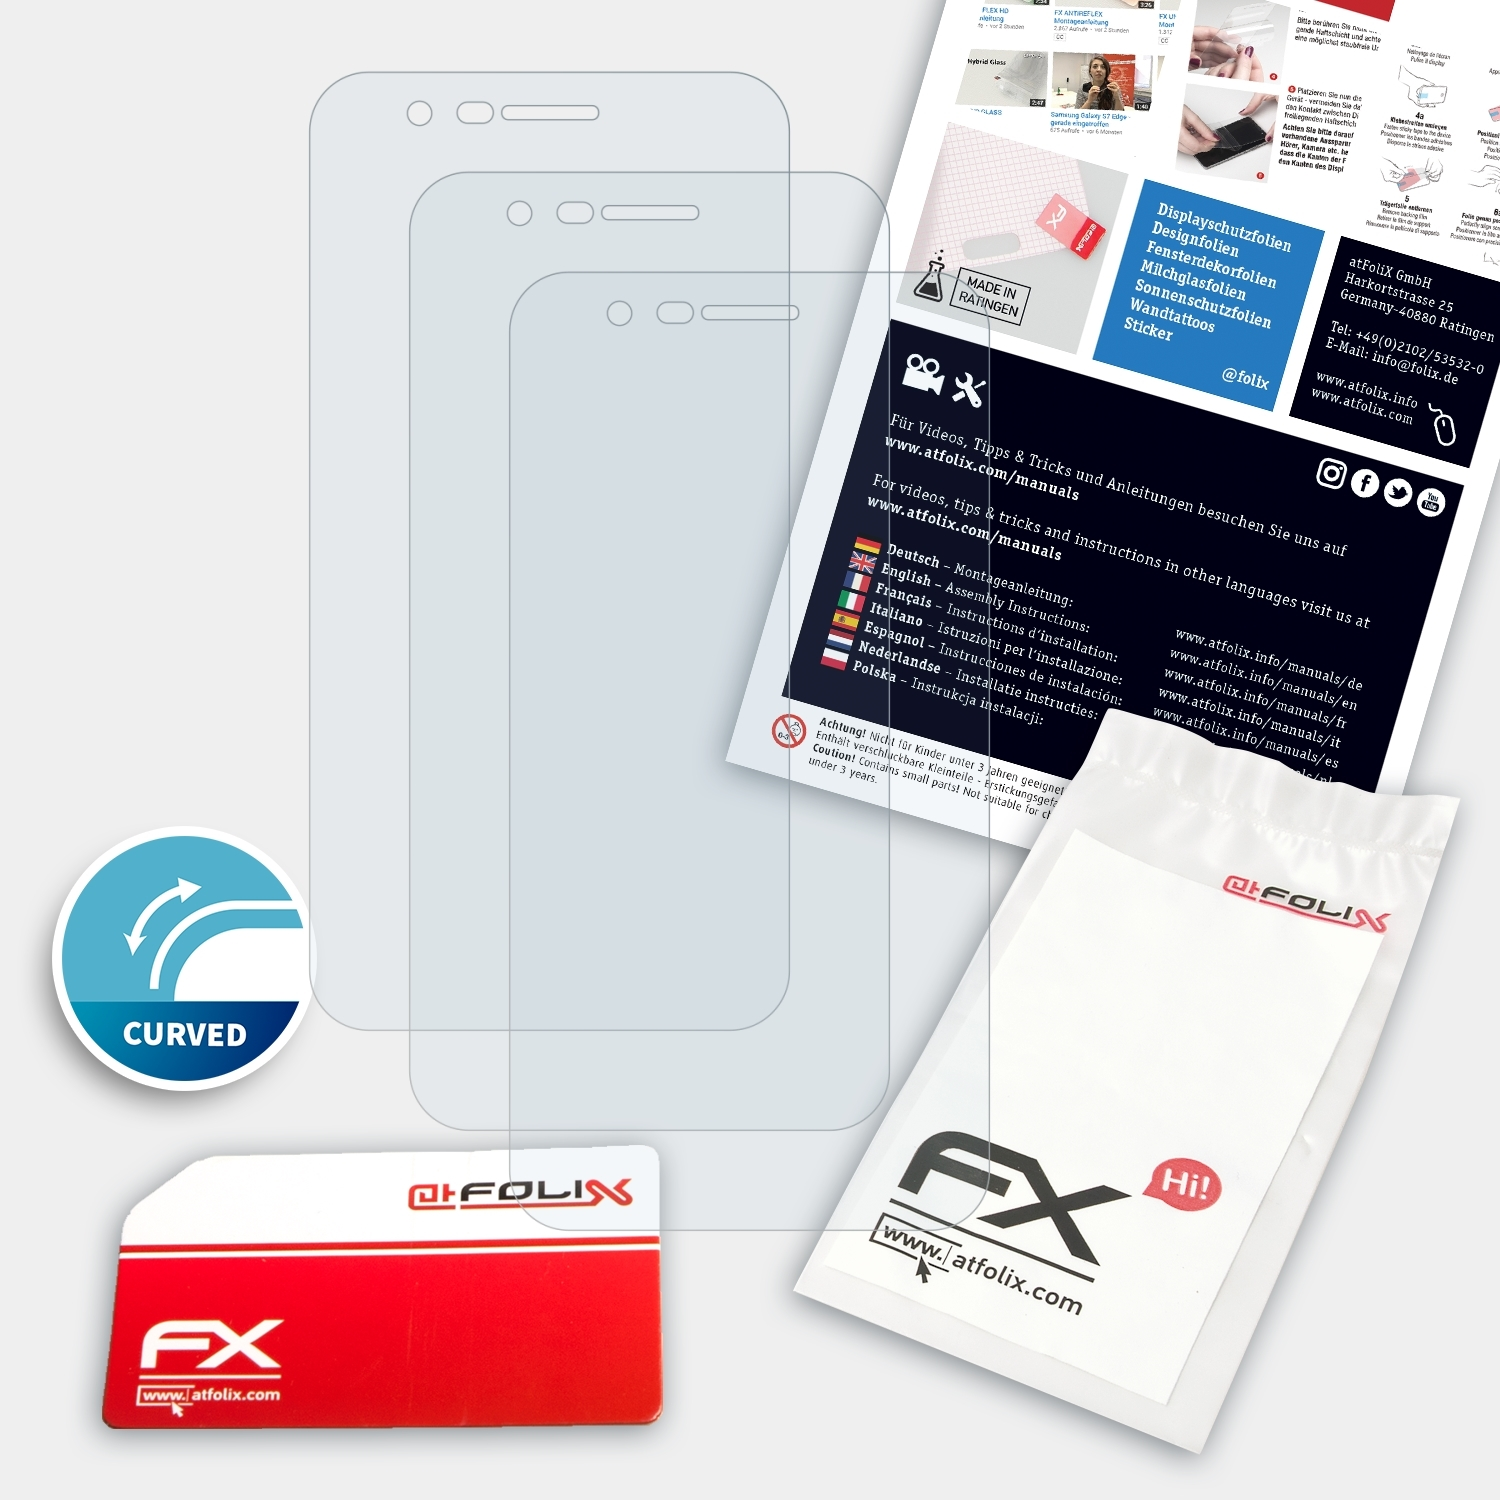 ATFOLIX 3x FX-ActiFleX K11 Displayschutz(für Plus) LG